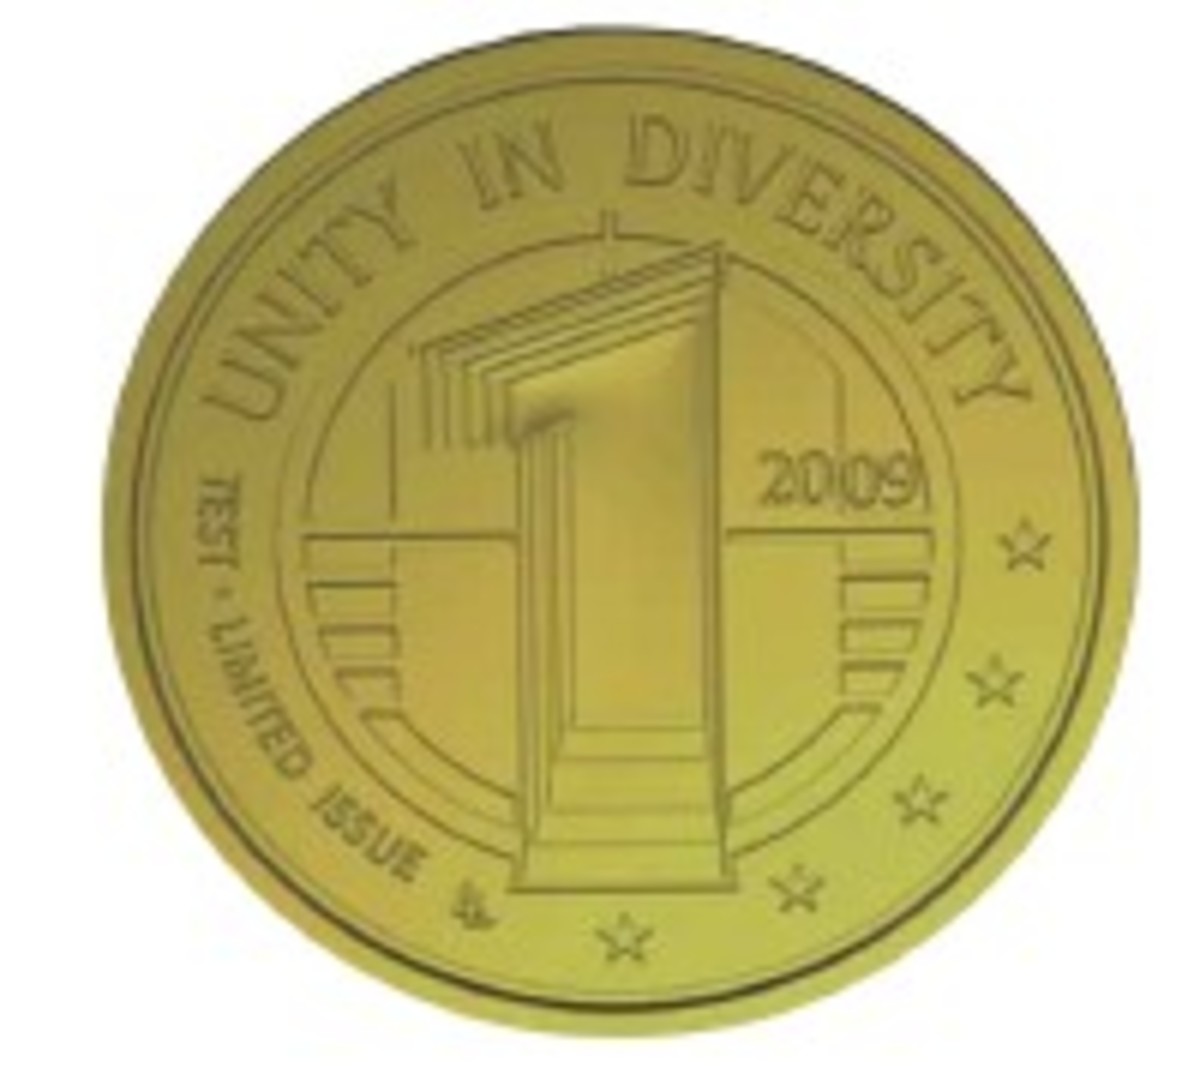 eurodollar.jpg